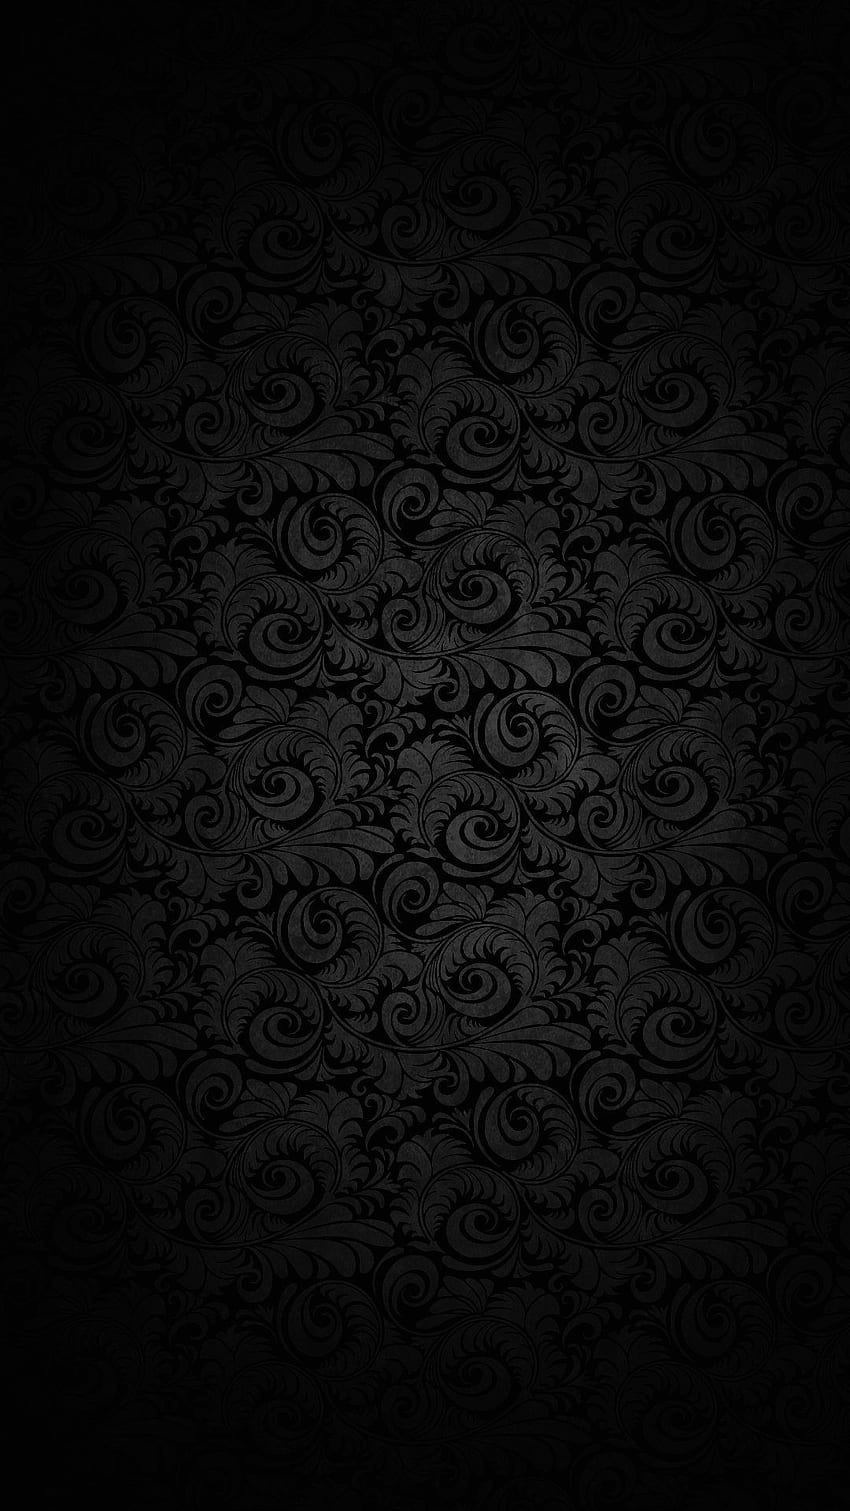 Negro elegante, blanco y negro elegante fondo de pantalla del teléfono